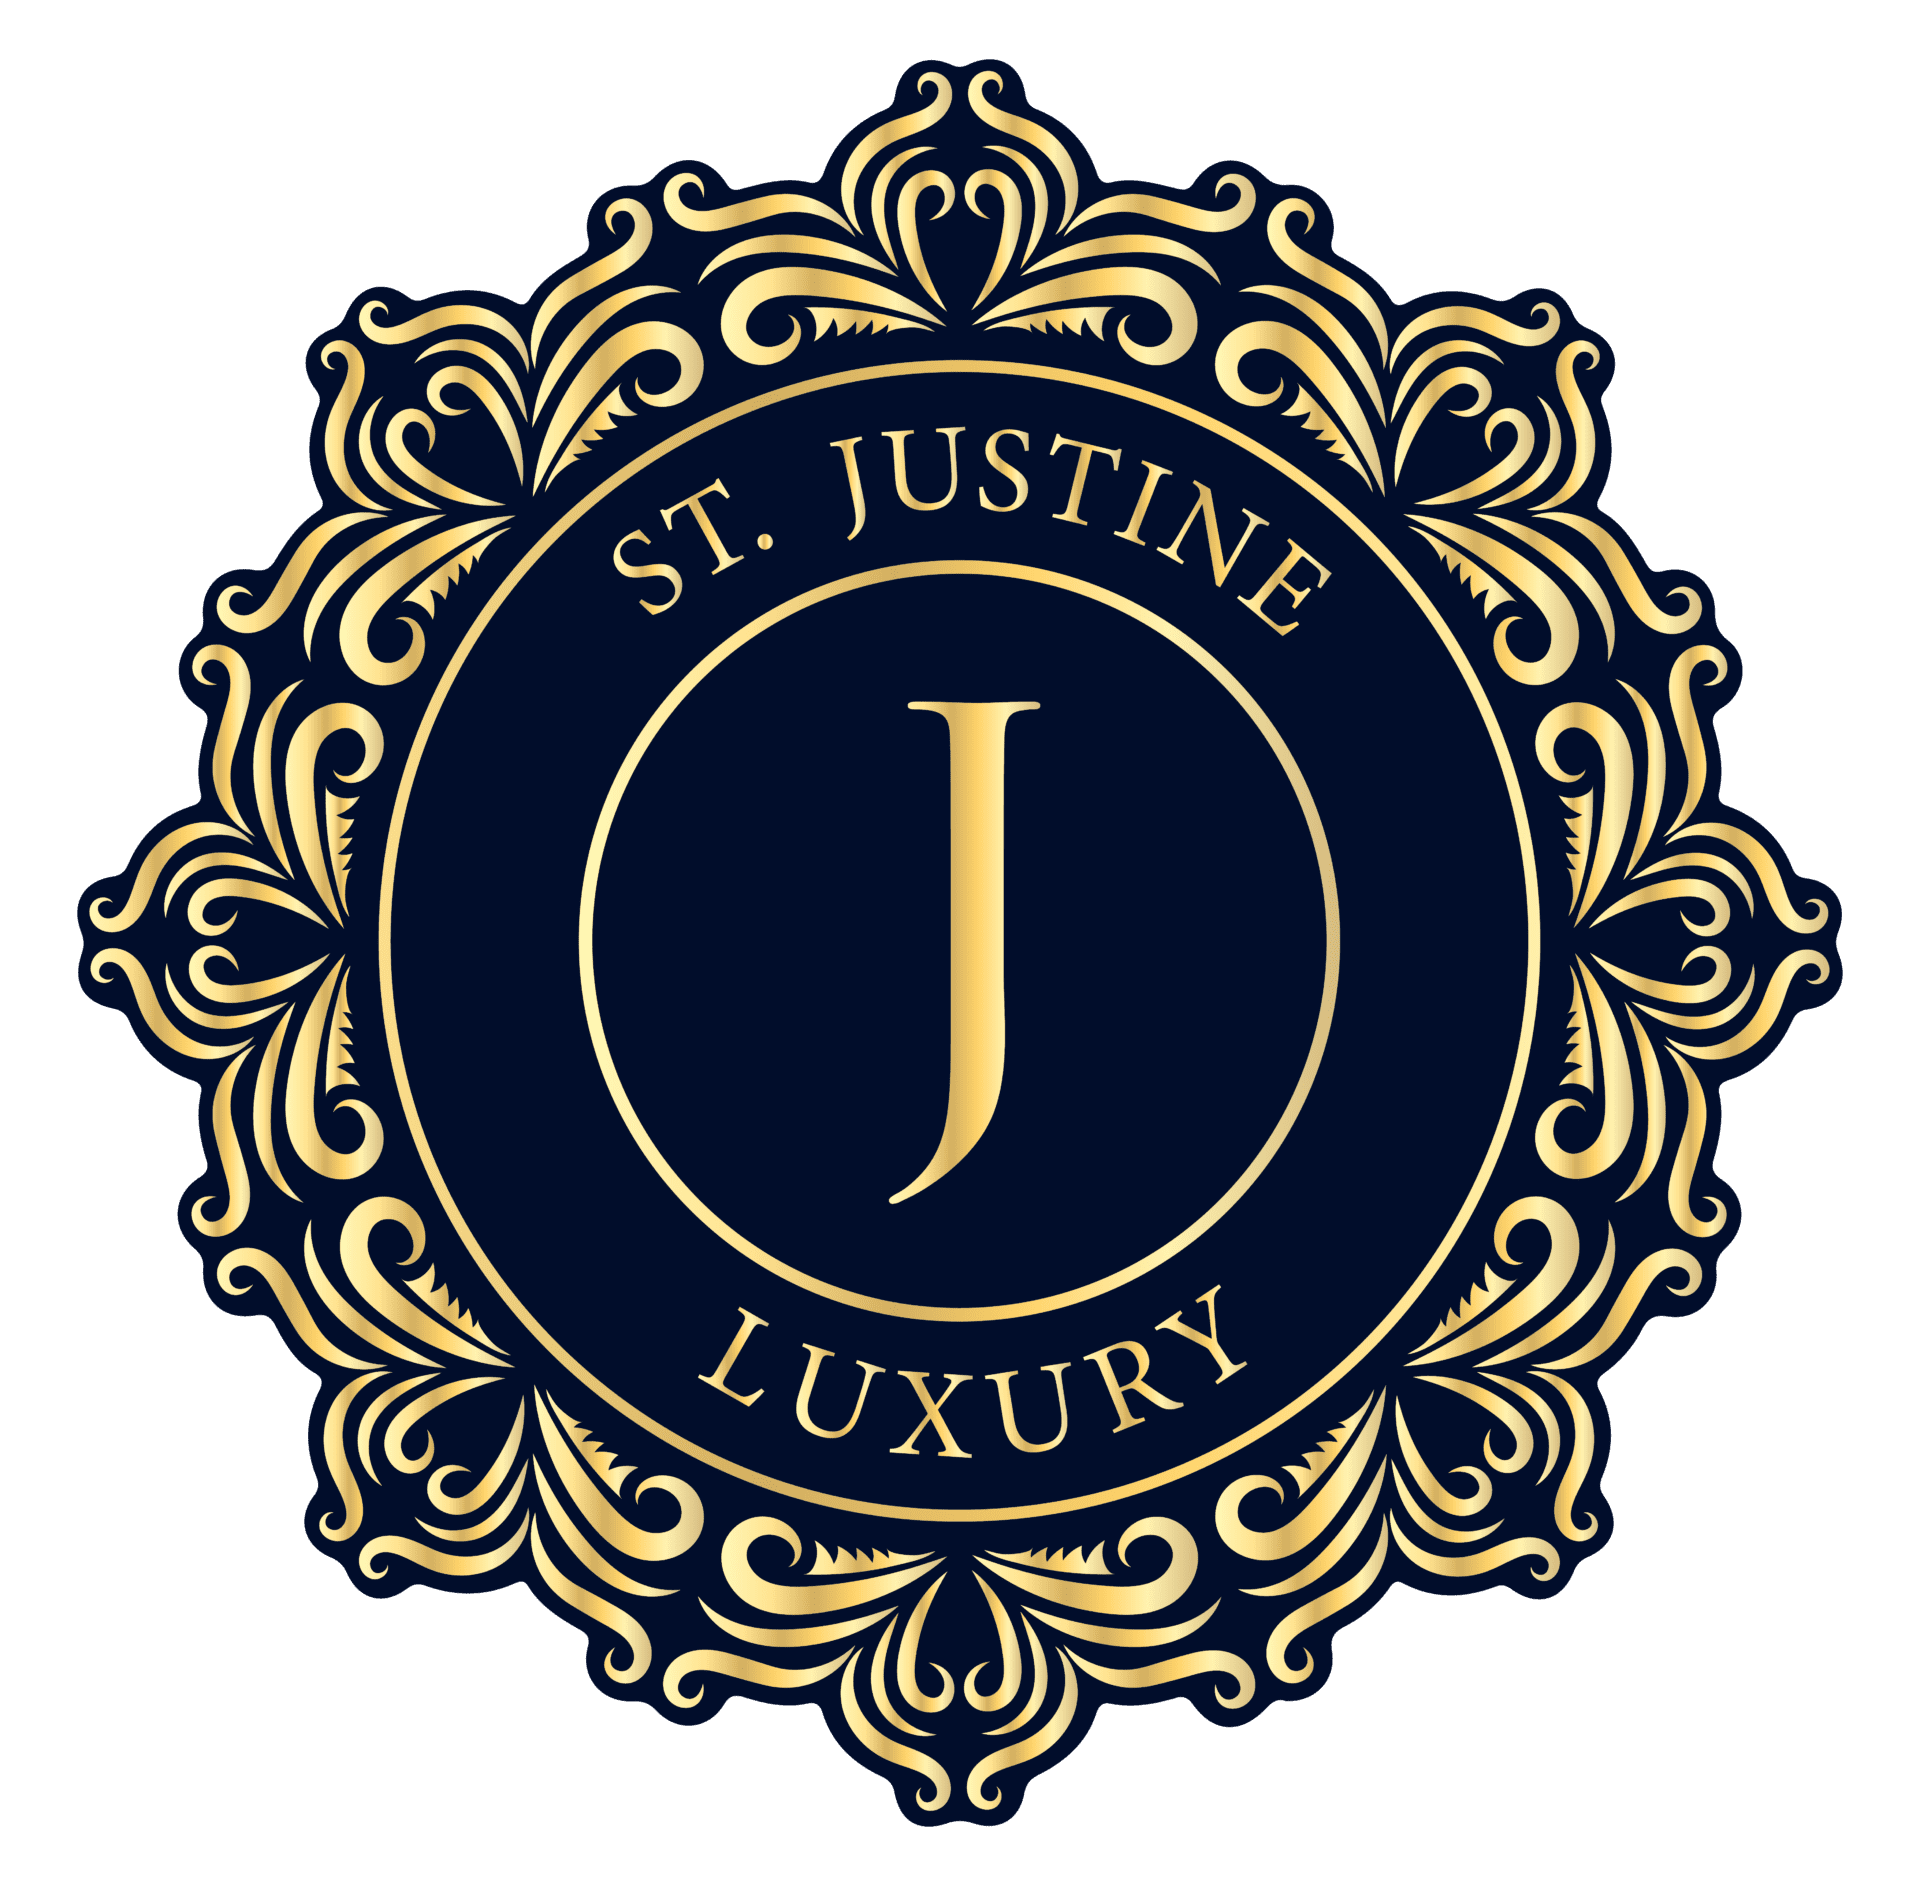 St Justine Hotels - Logo